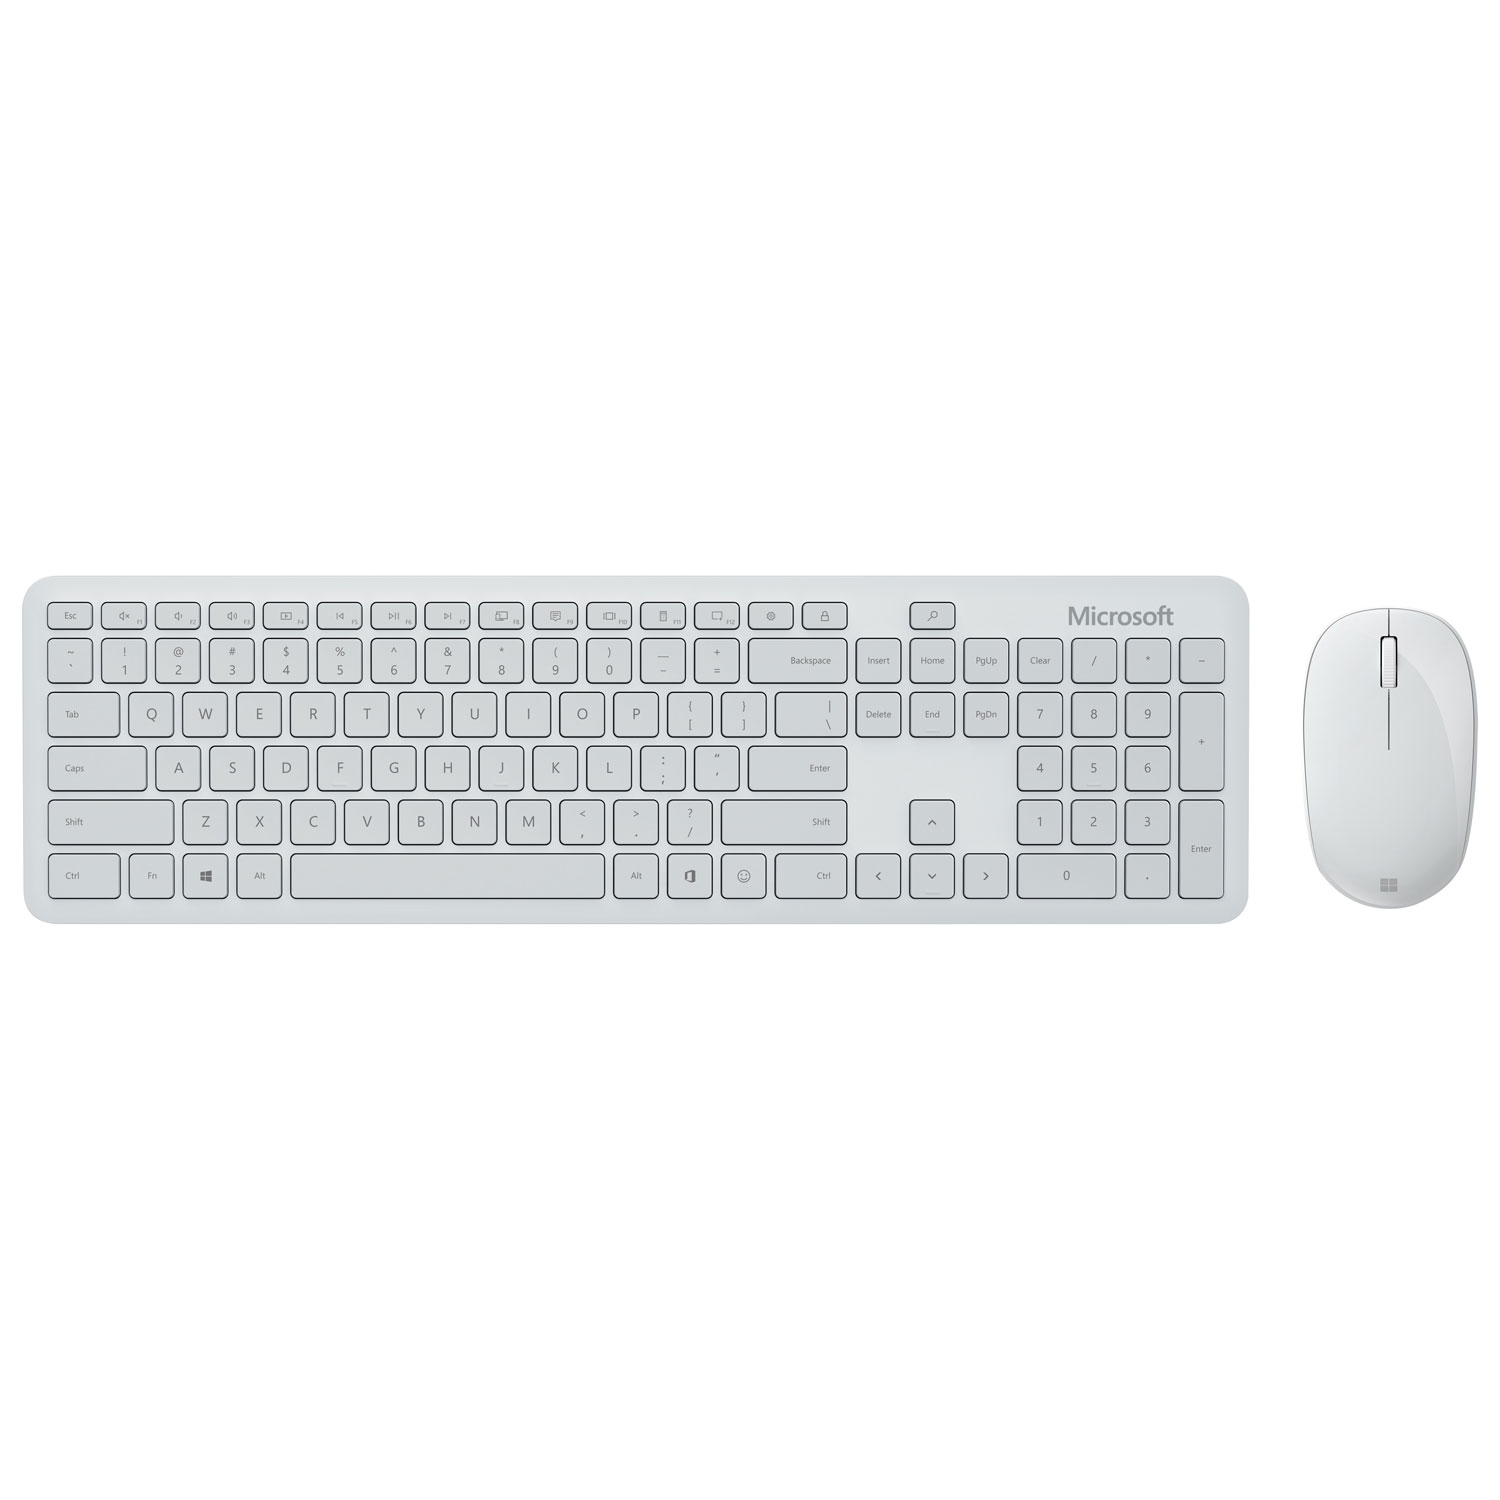 Microsoft Bluetooth Red Tracking Desktop Keyboard & Mouse Combo (QHG-00031) - Grey - English